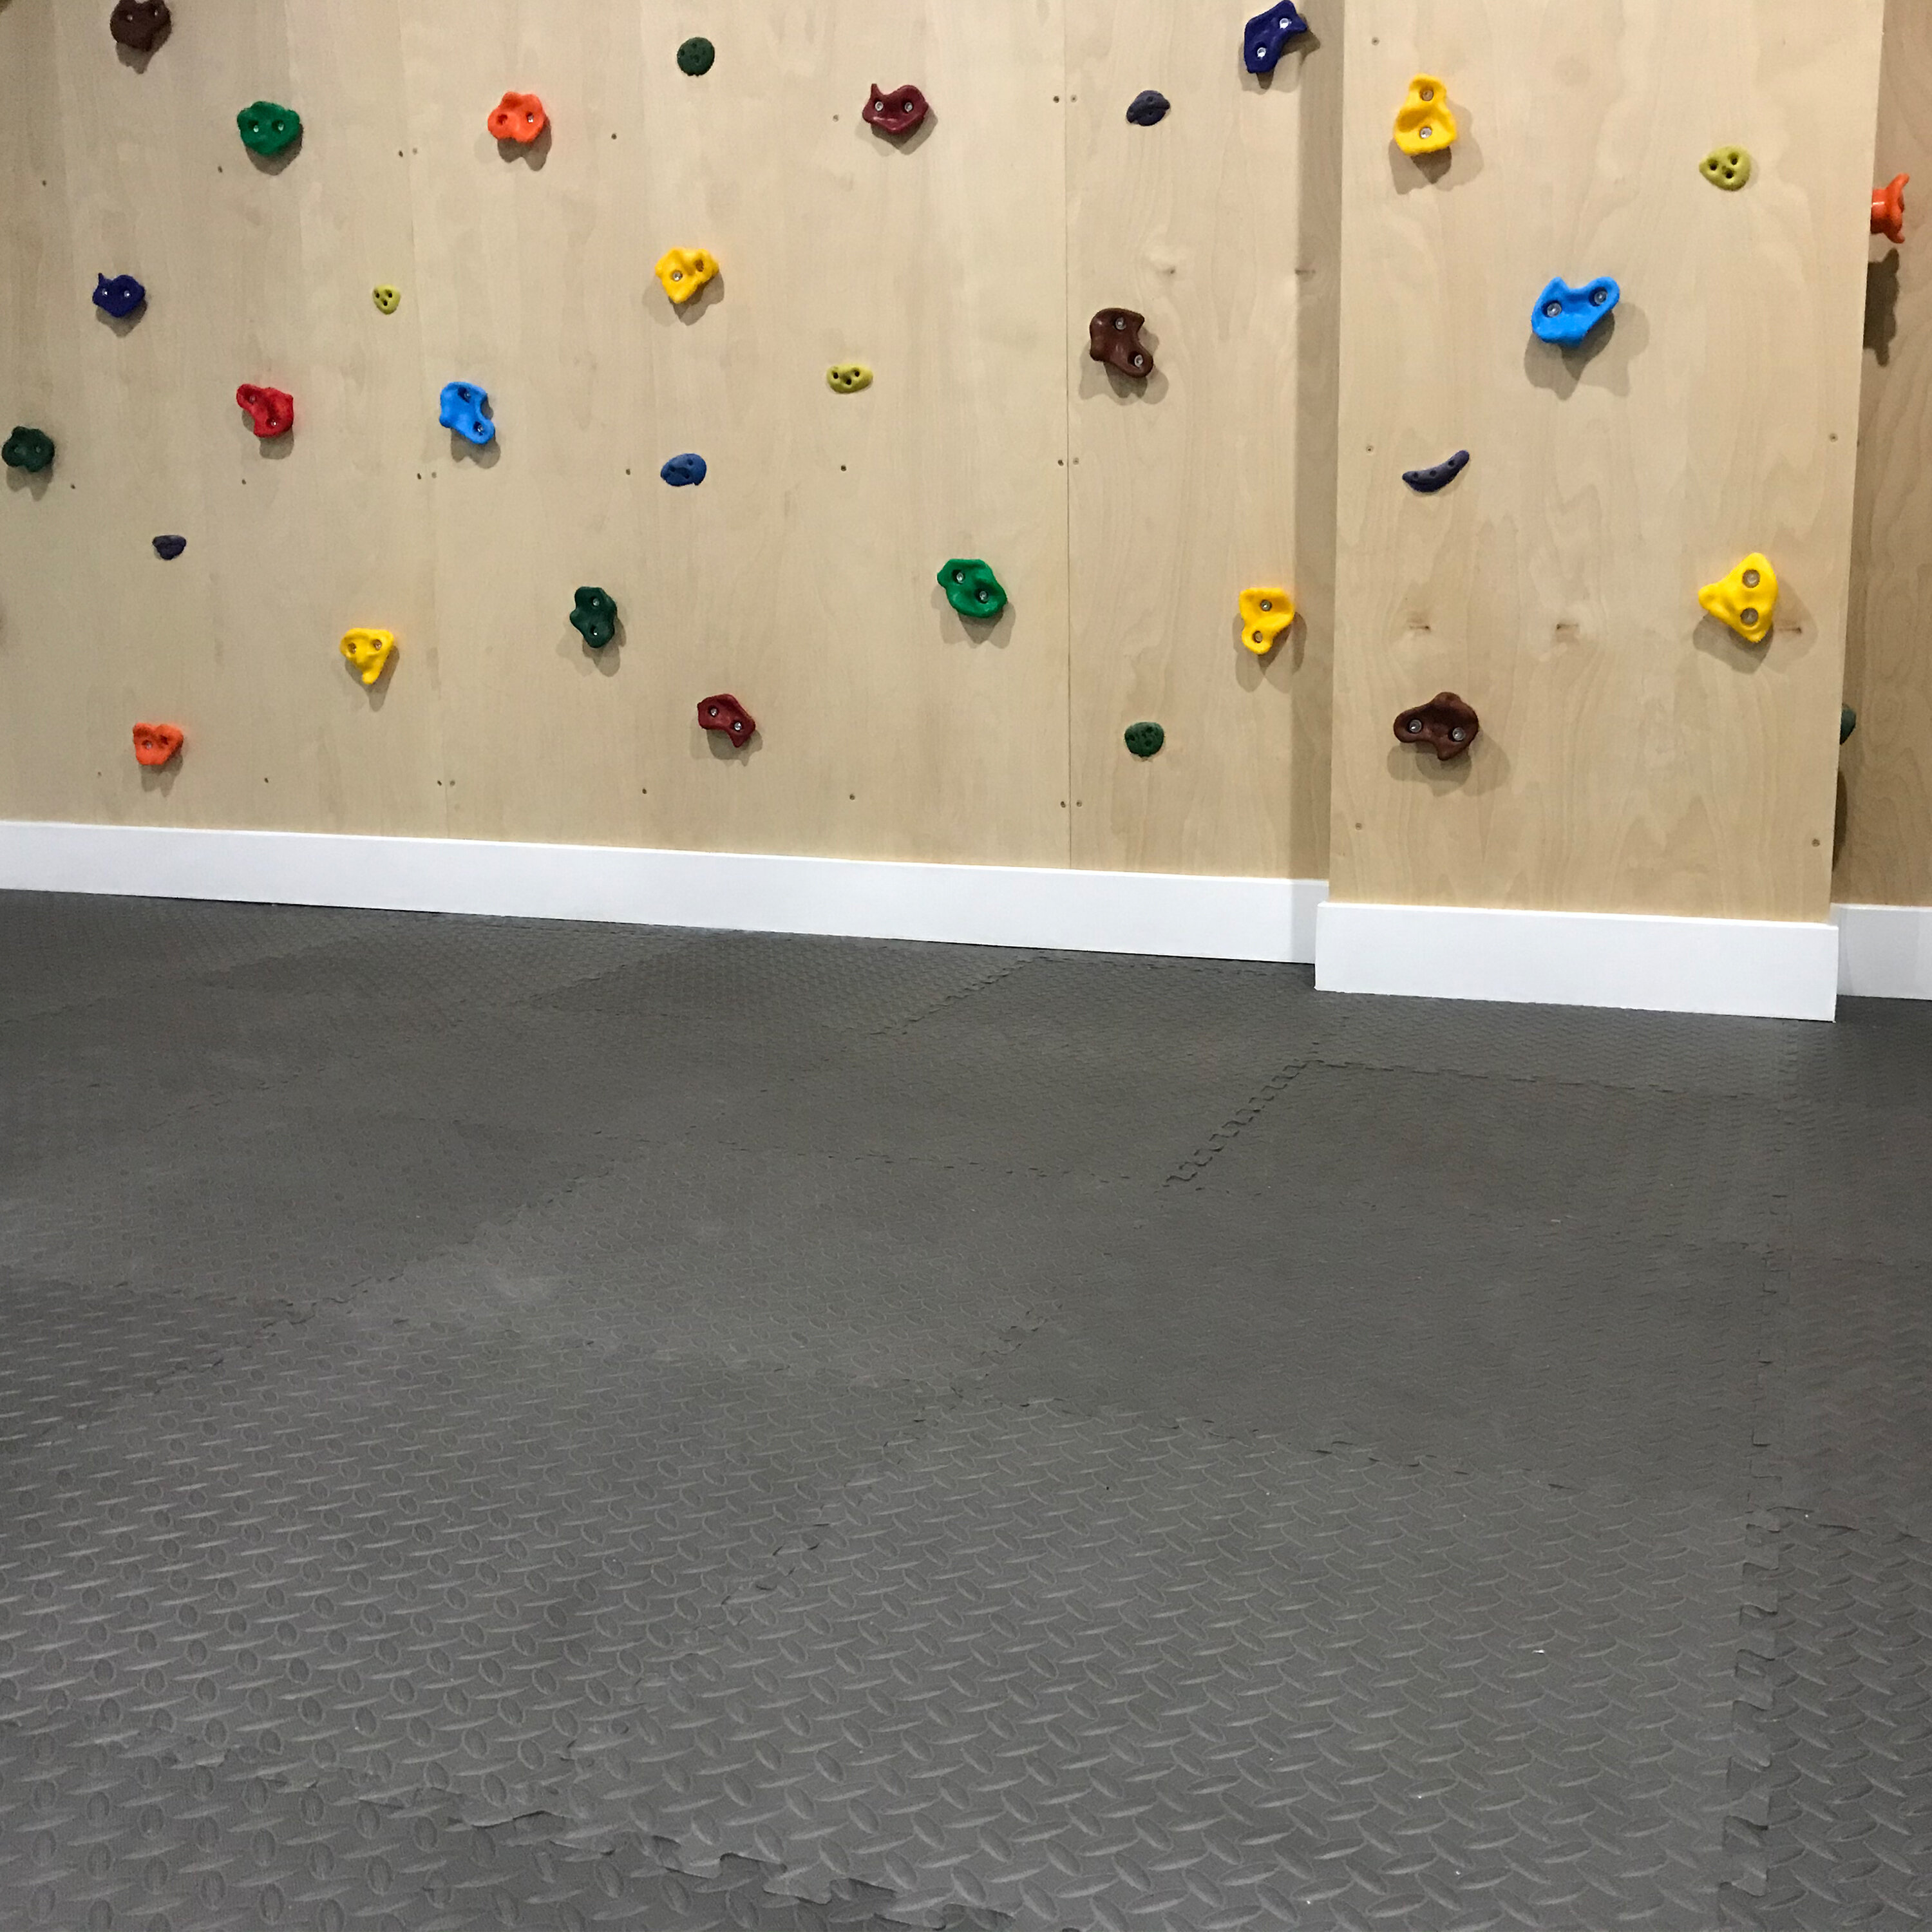 EVA Foam Mat Tiles 6-Pack - 24 SQ FT of Interlocking Padding for Garage,  Playroom, or Gym Flooring - Workout Mat or Baby Playmat by Stalwart (Gray)